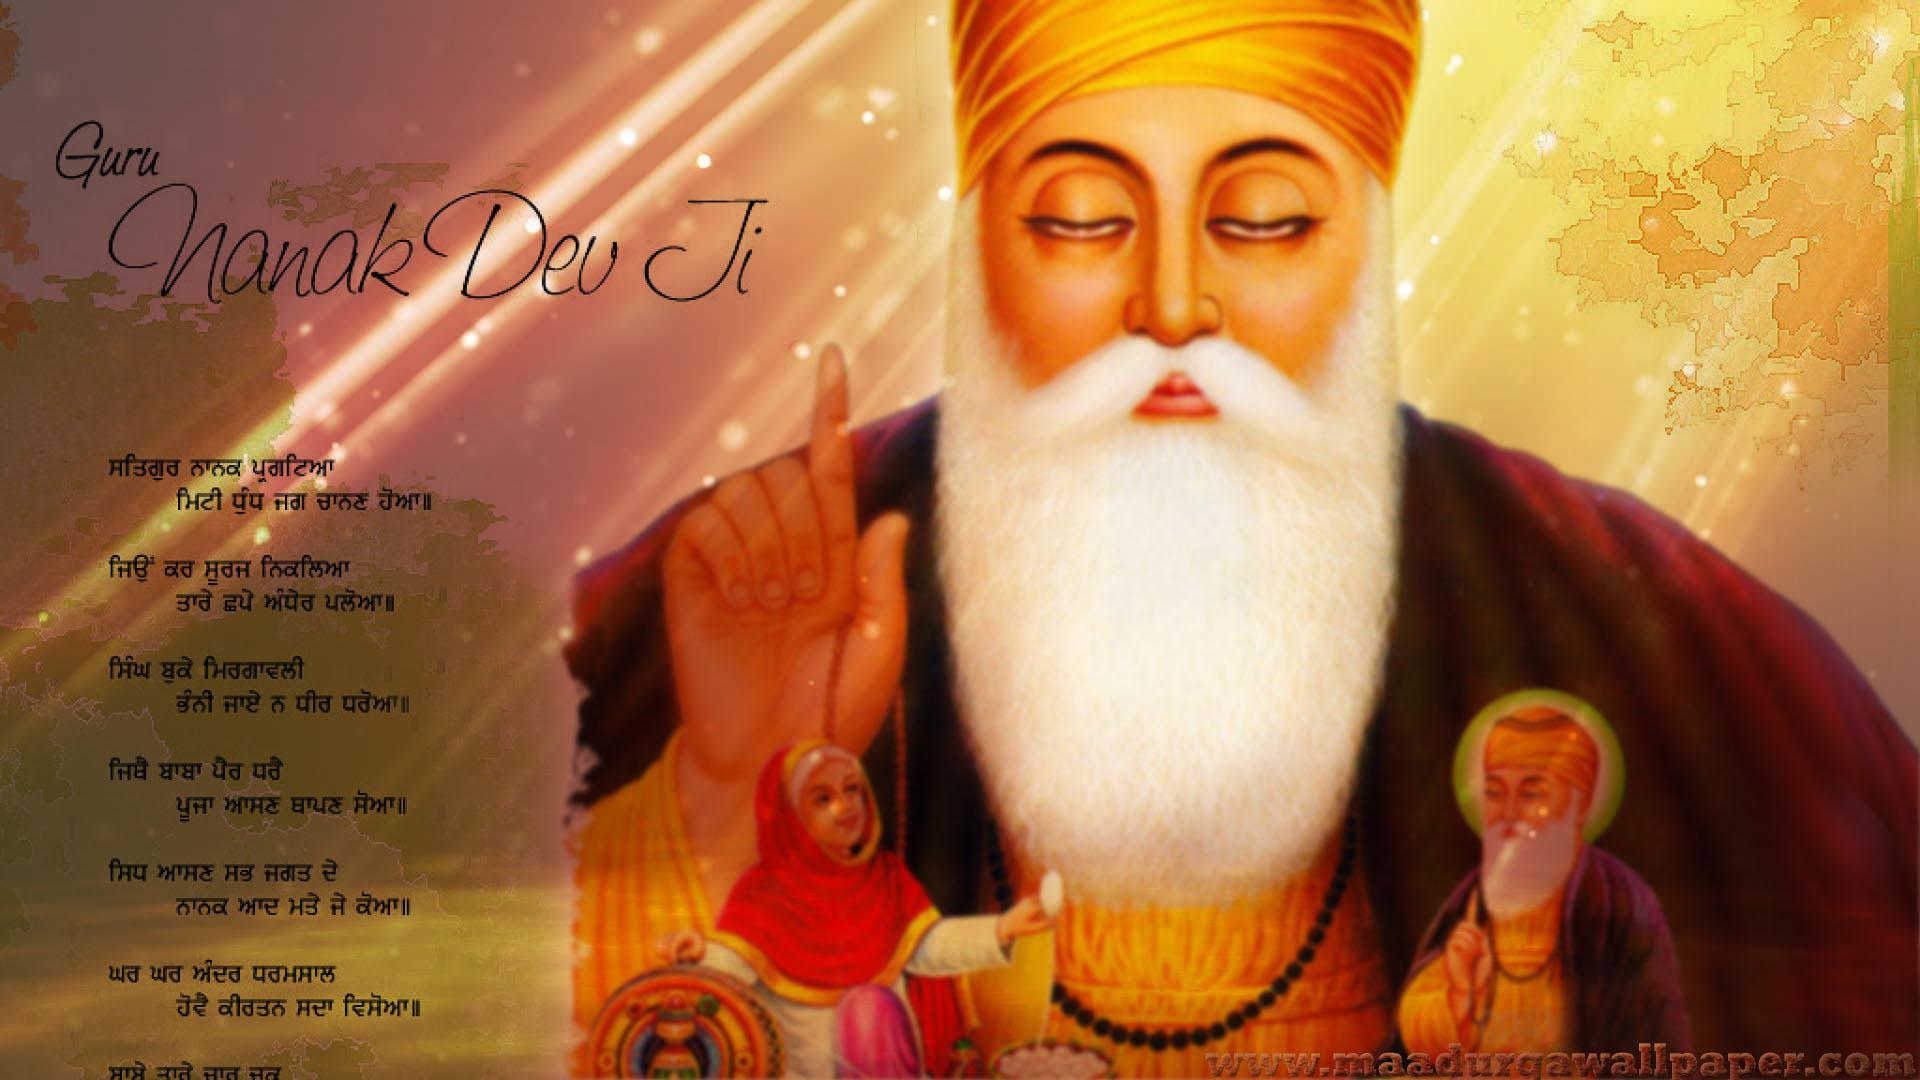 Guru Nanak HD Photo, image & wallpaper download free